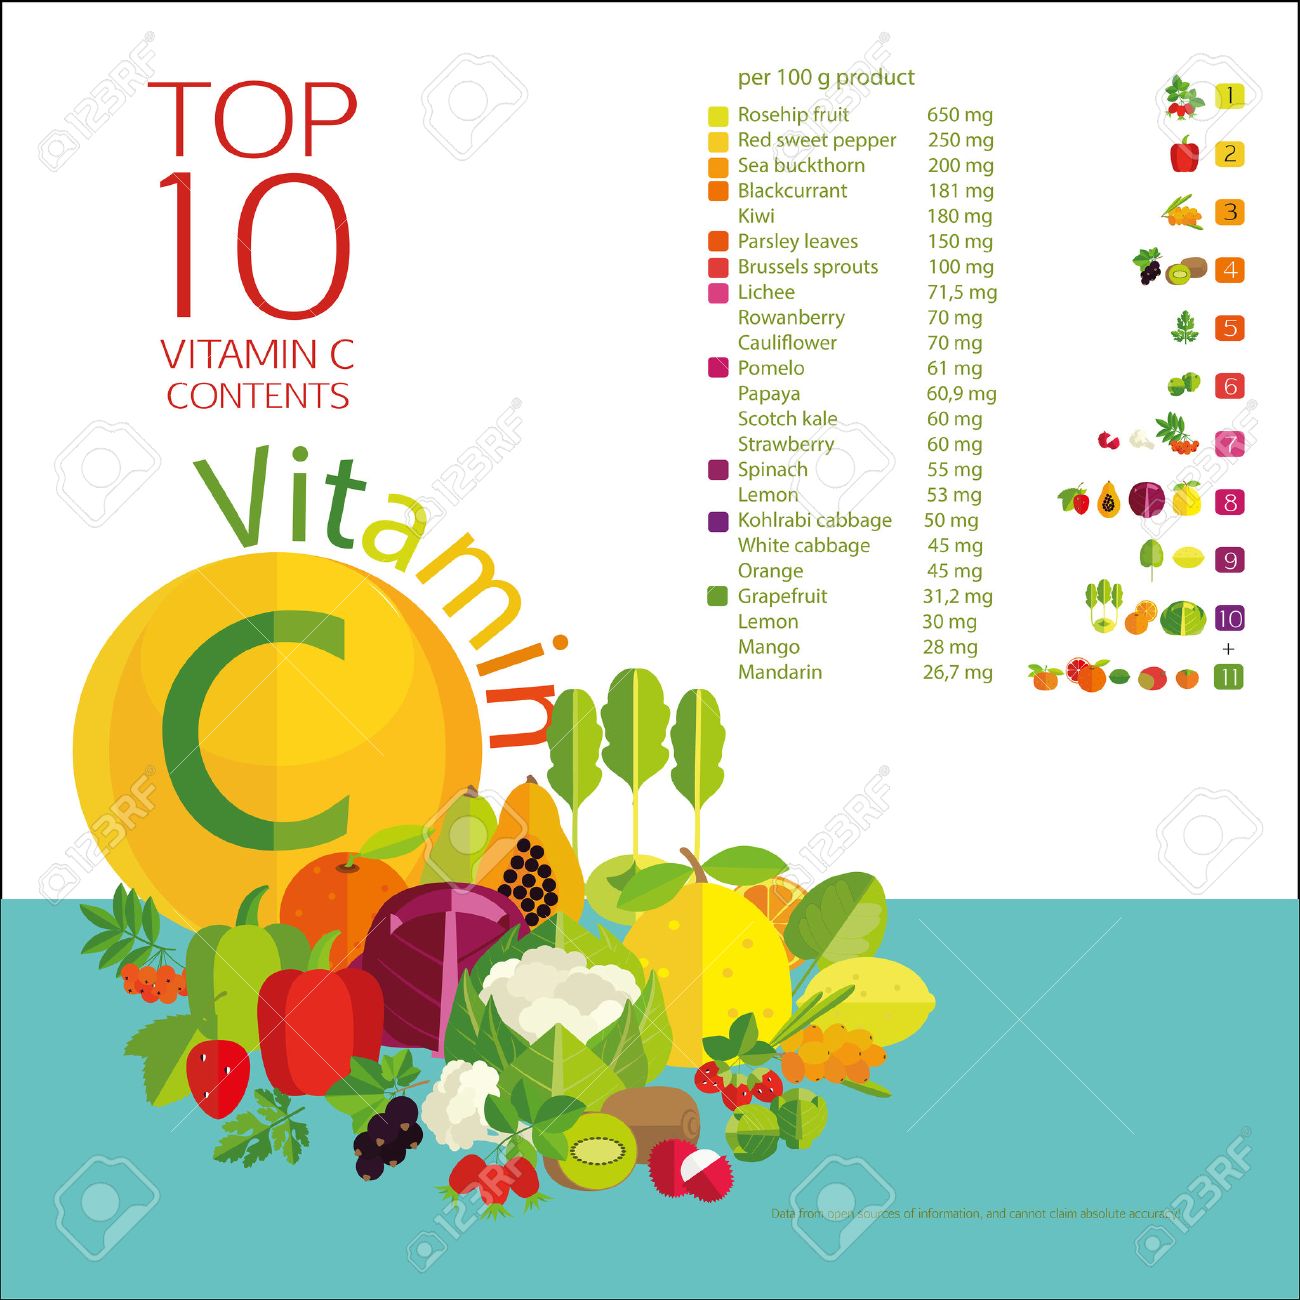 Vitamin C Intake Chart